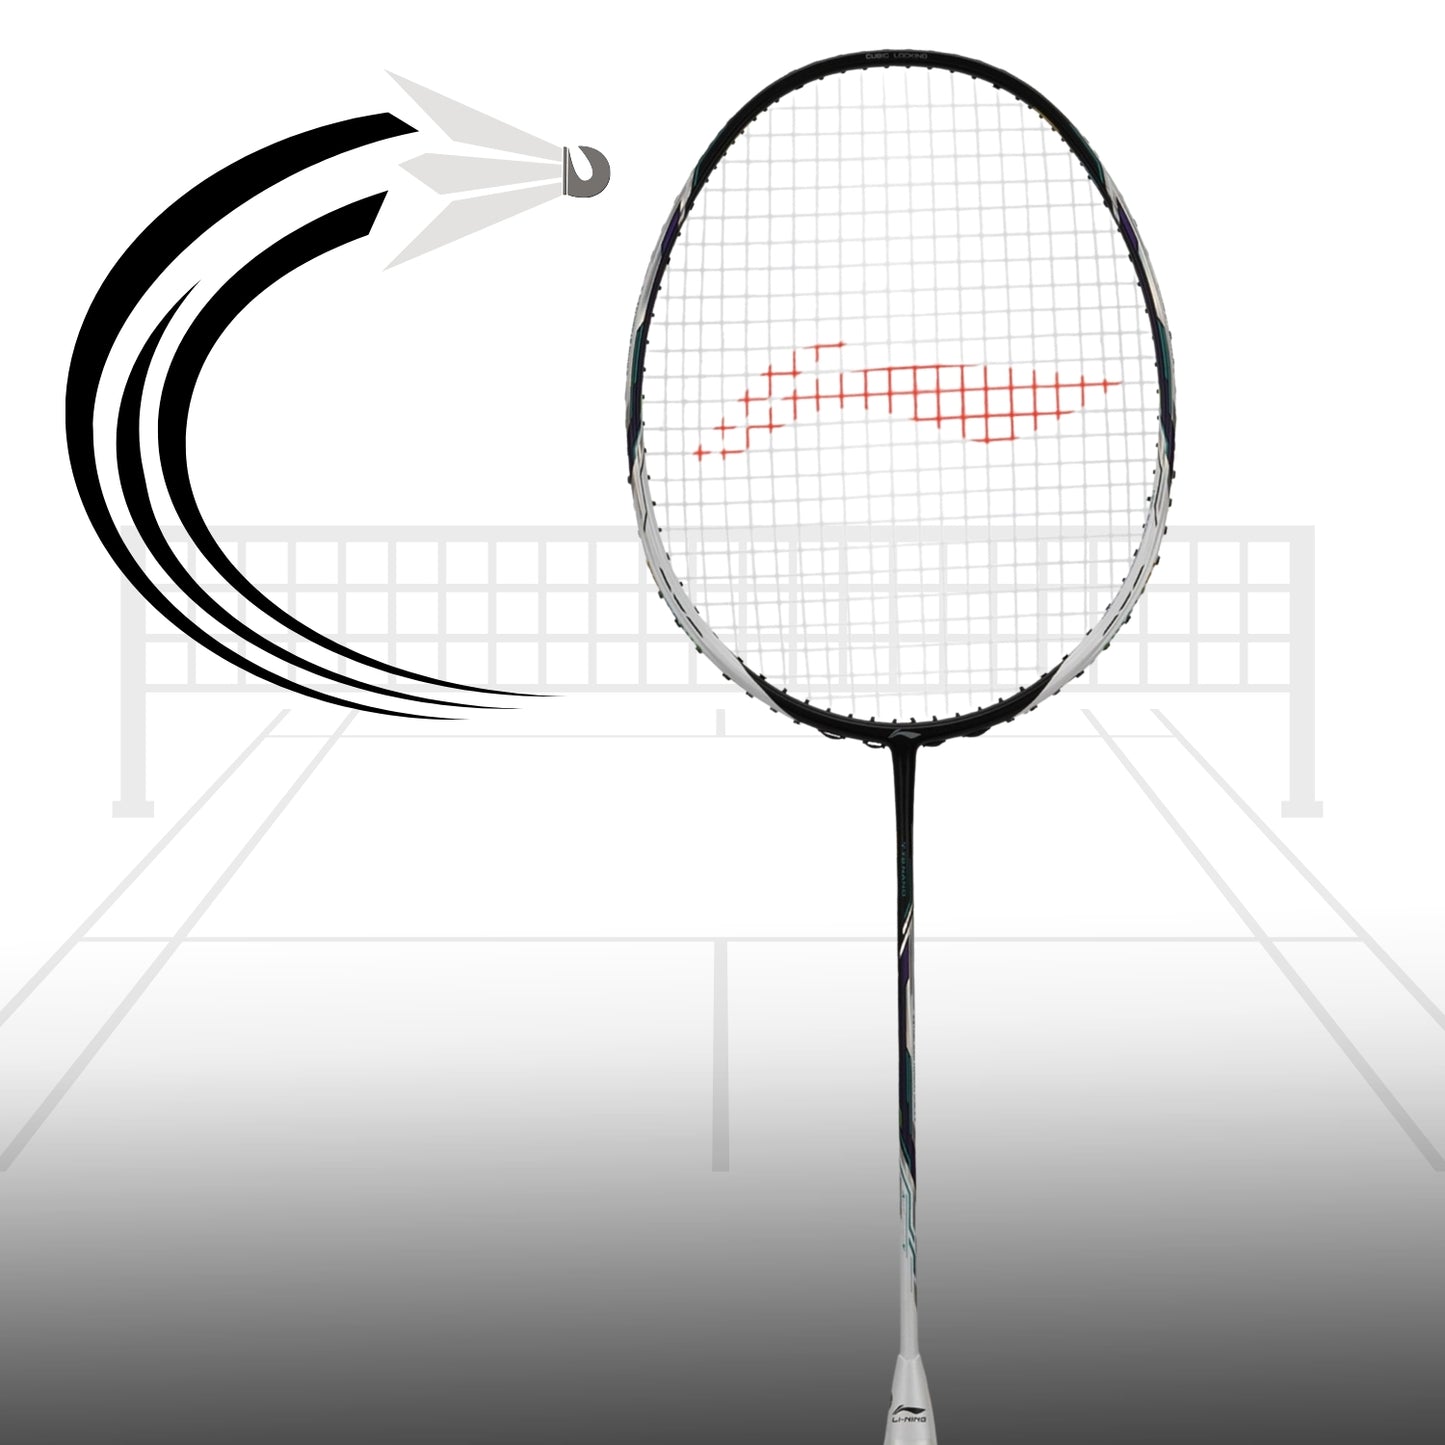 Li-Ning Tectonic 9 Badminton Racquet, Black/White - 83 Grams (4U) - Best Price online Prokicksports.com